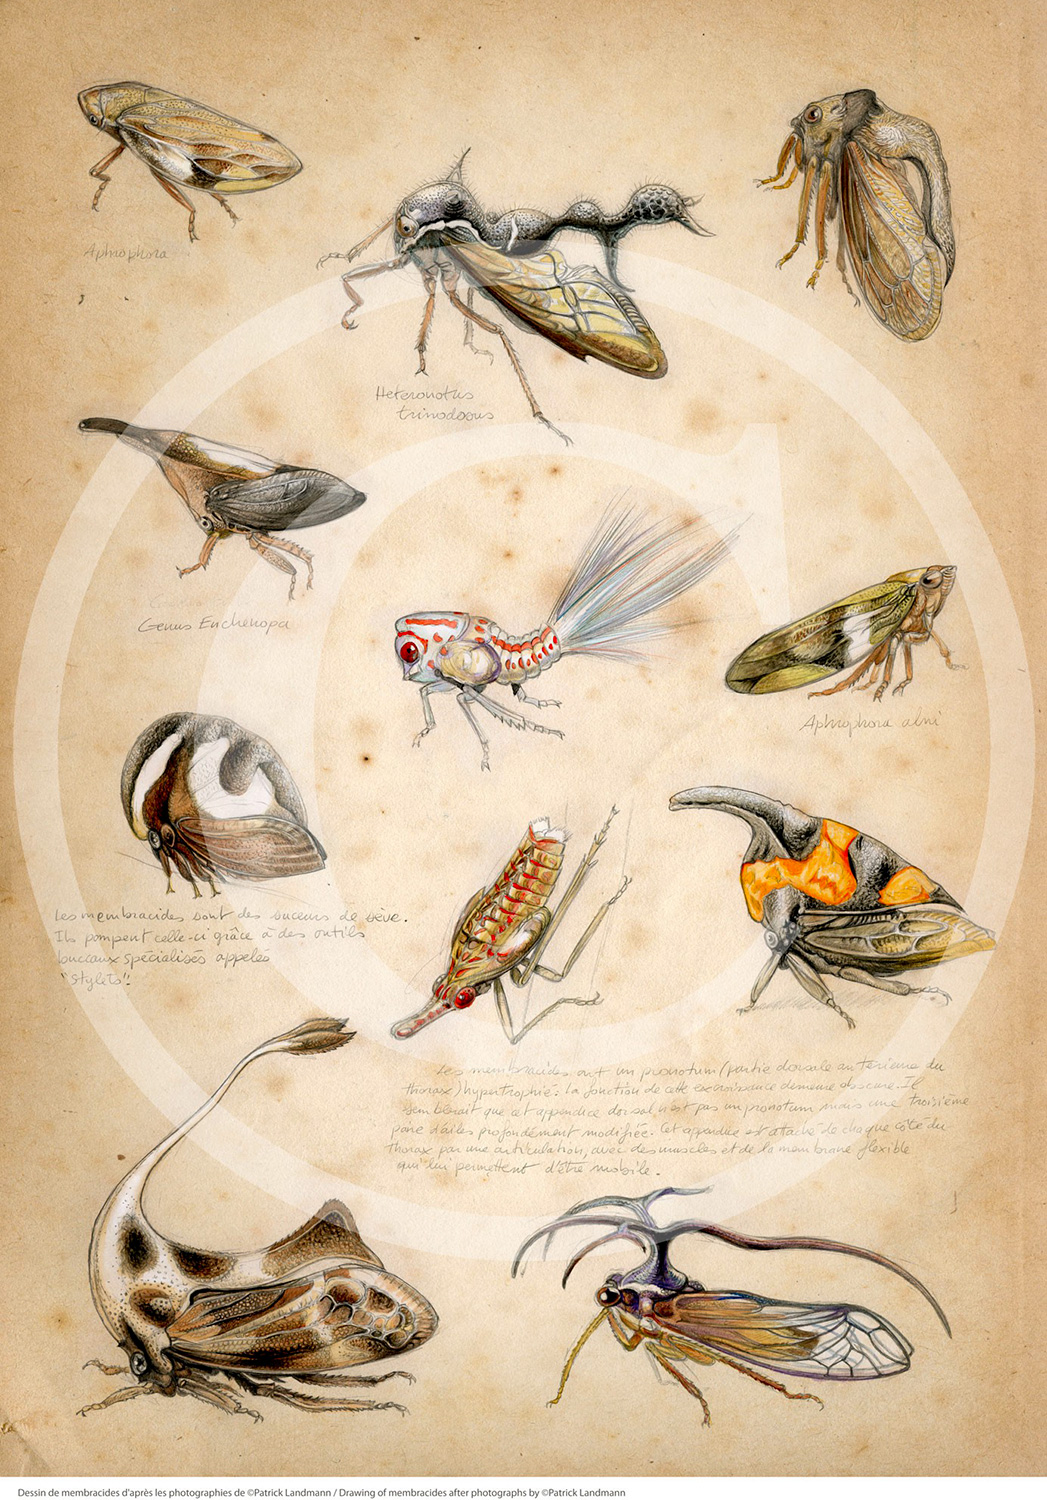 Marcello-art: Entomology 89 - Treehopper